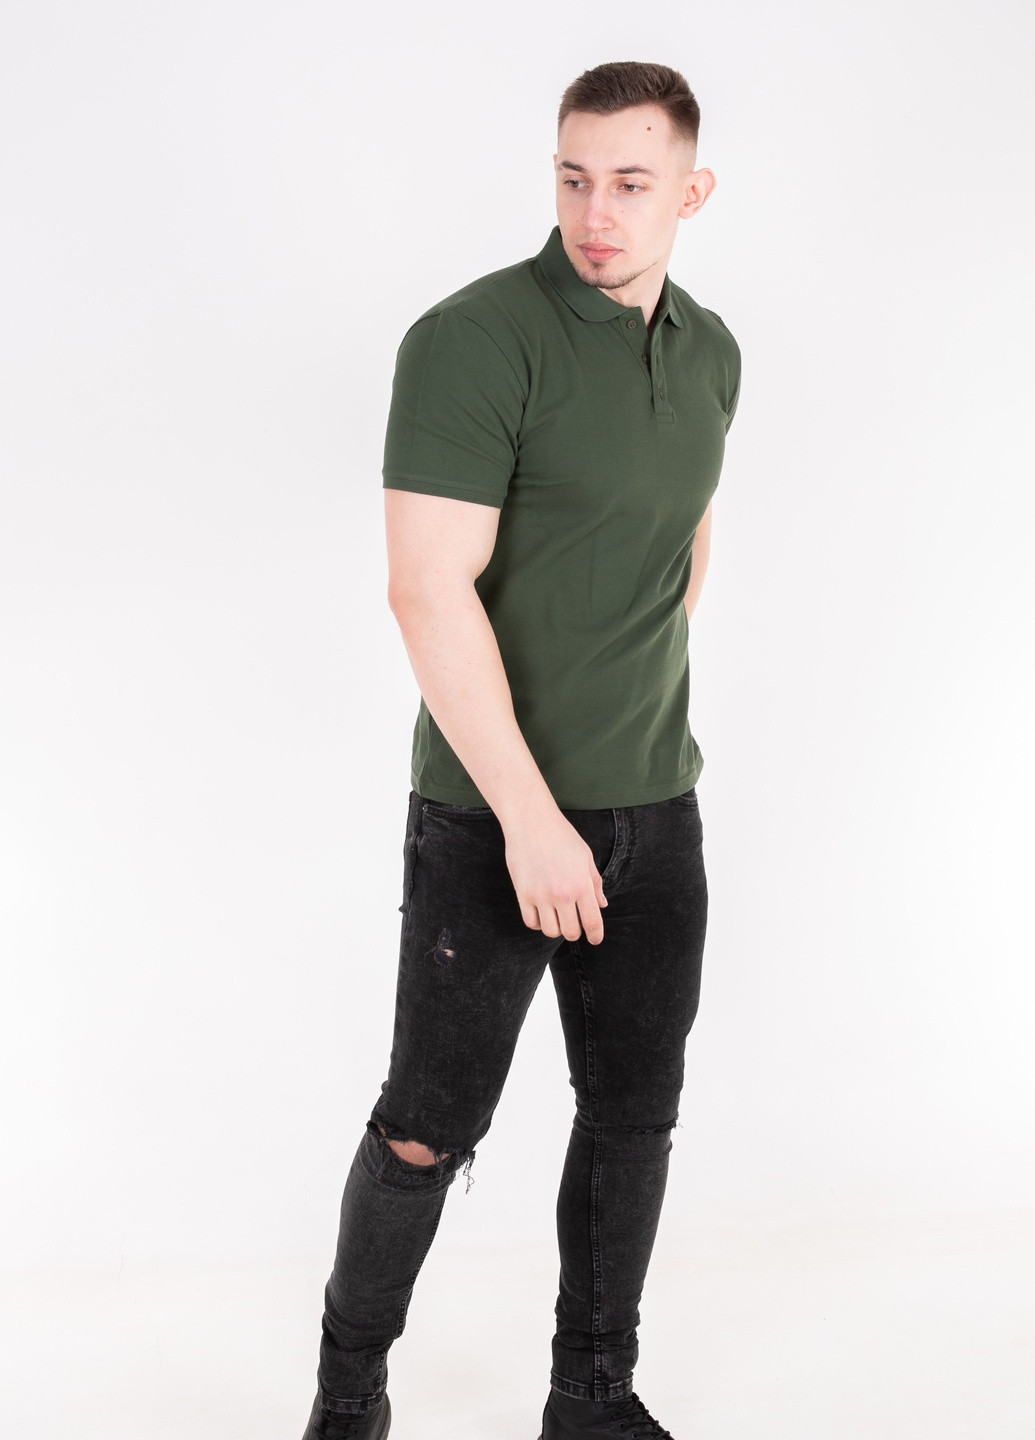 Оливковая (хаки) футболка-футболка поло мужская для мужчин TvoePolo однотонная